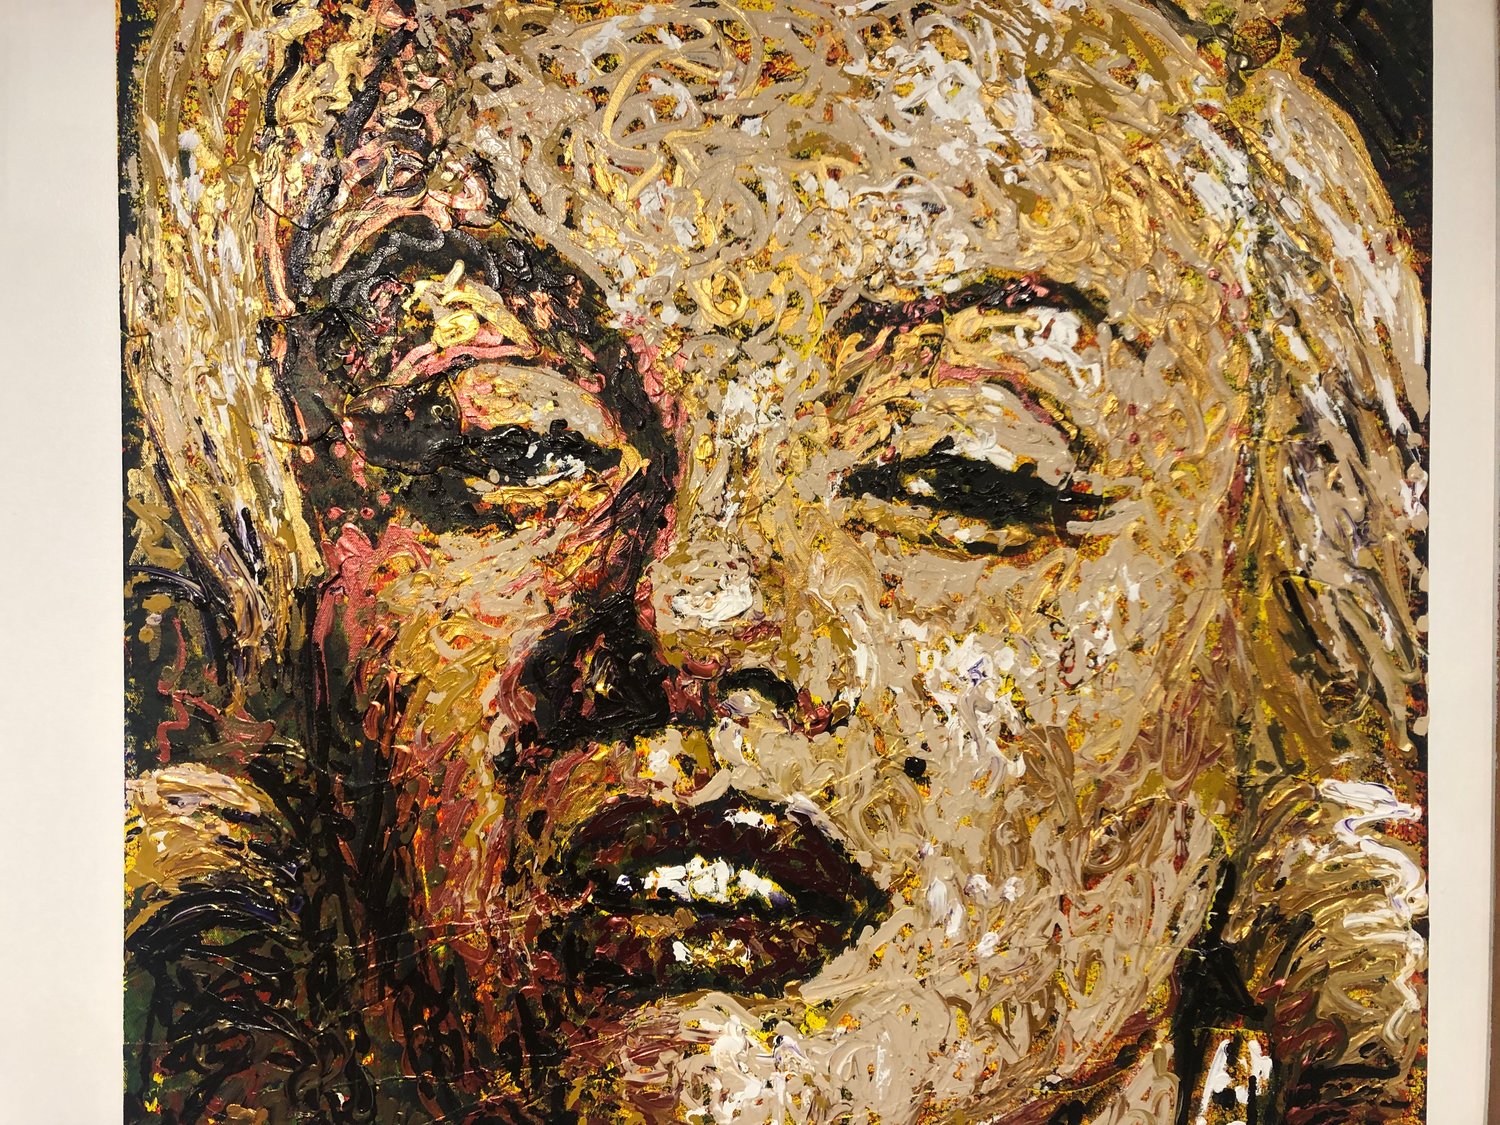 DeCunto's painting of Marilyn Monroe